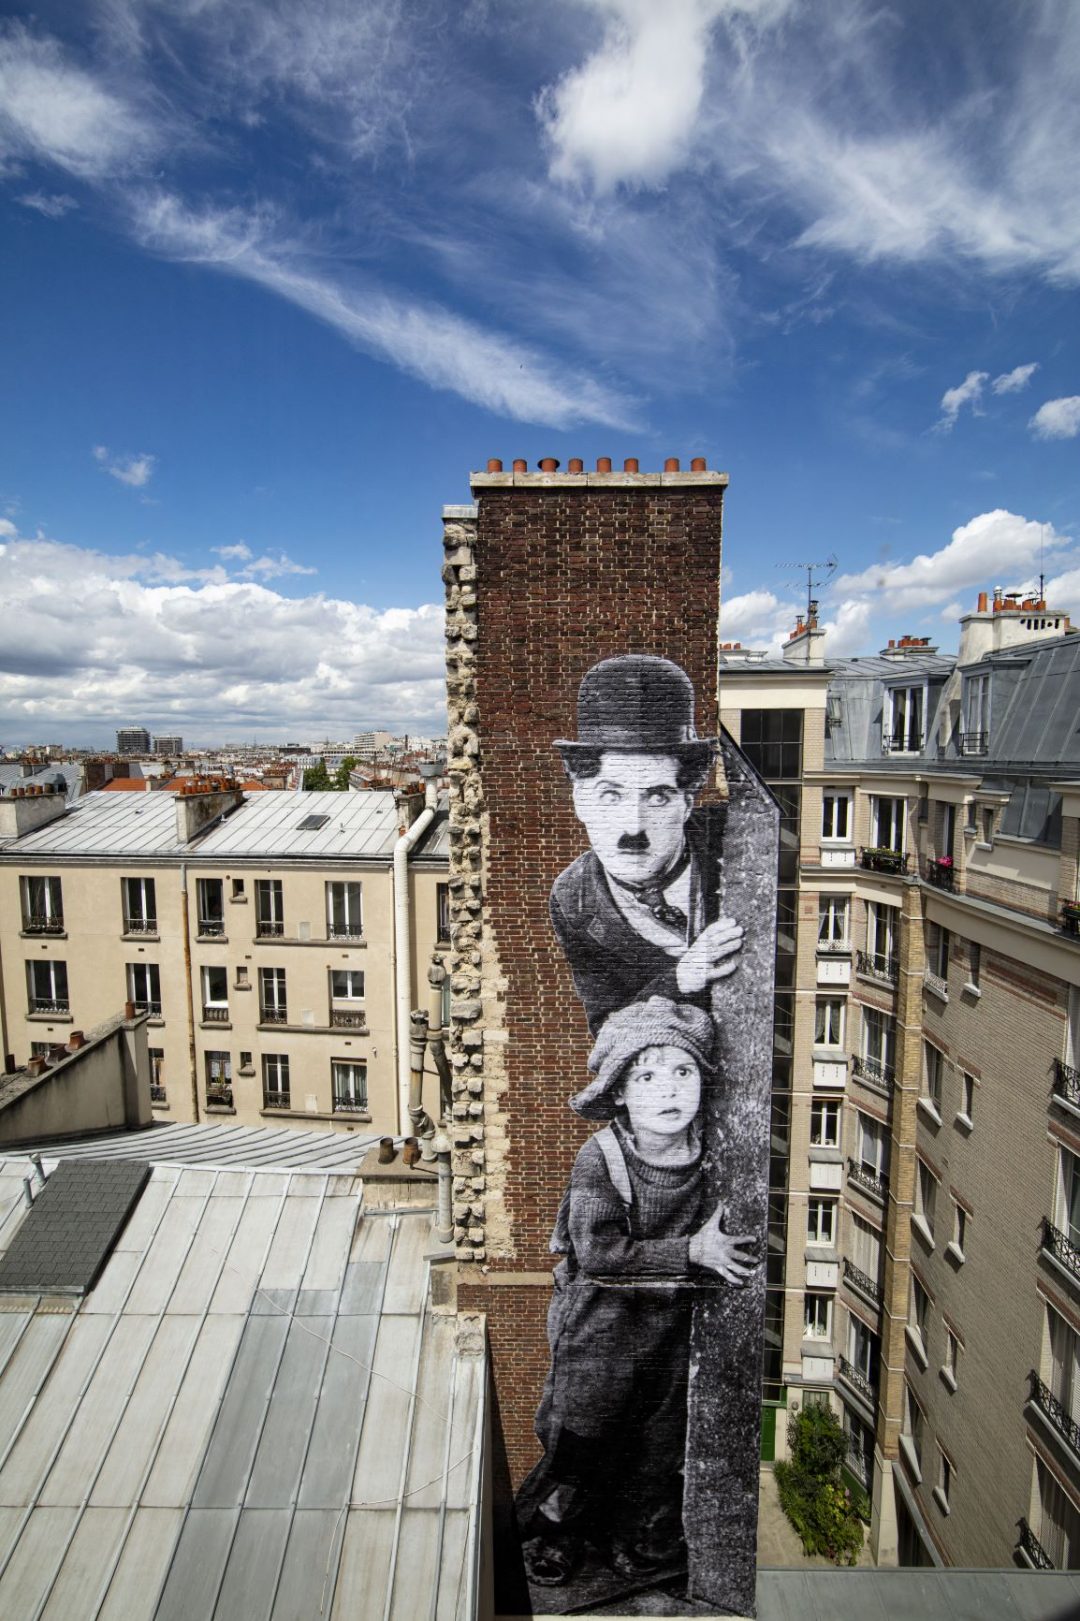 JR Charlie Chaplin Hotel Paradiso Parigi